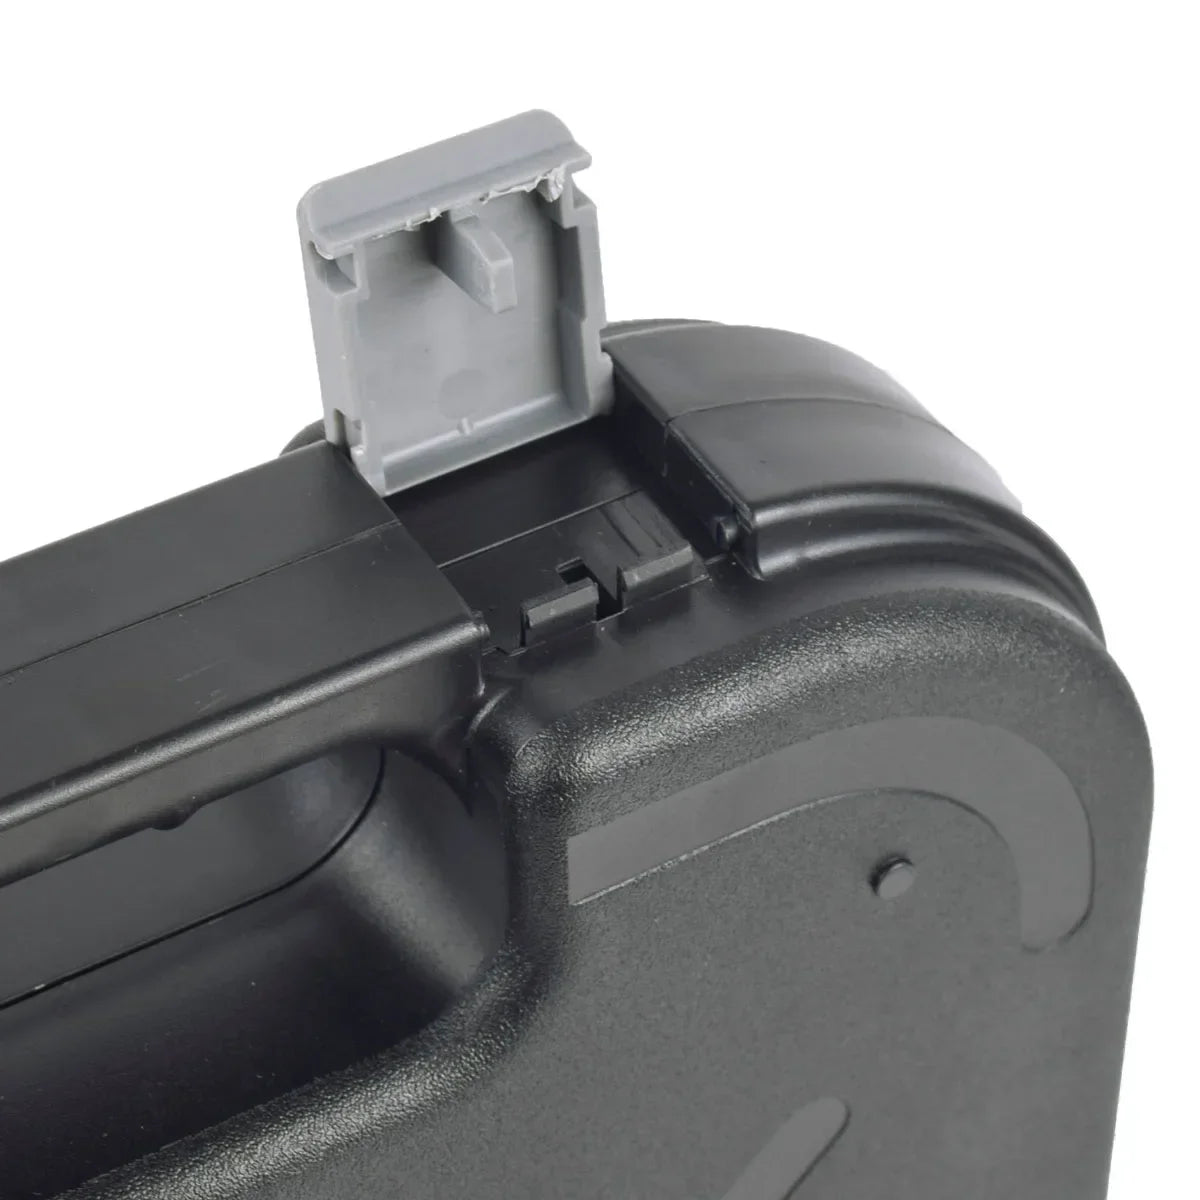 GLOCK Storage box Multifunctional Portable Plastic Gun Case